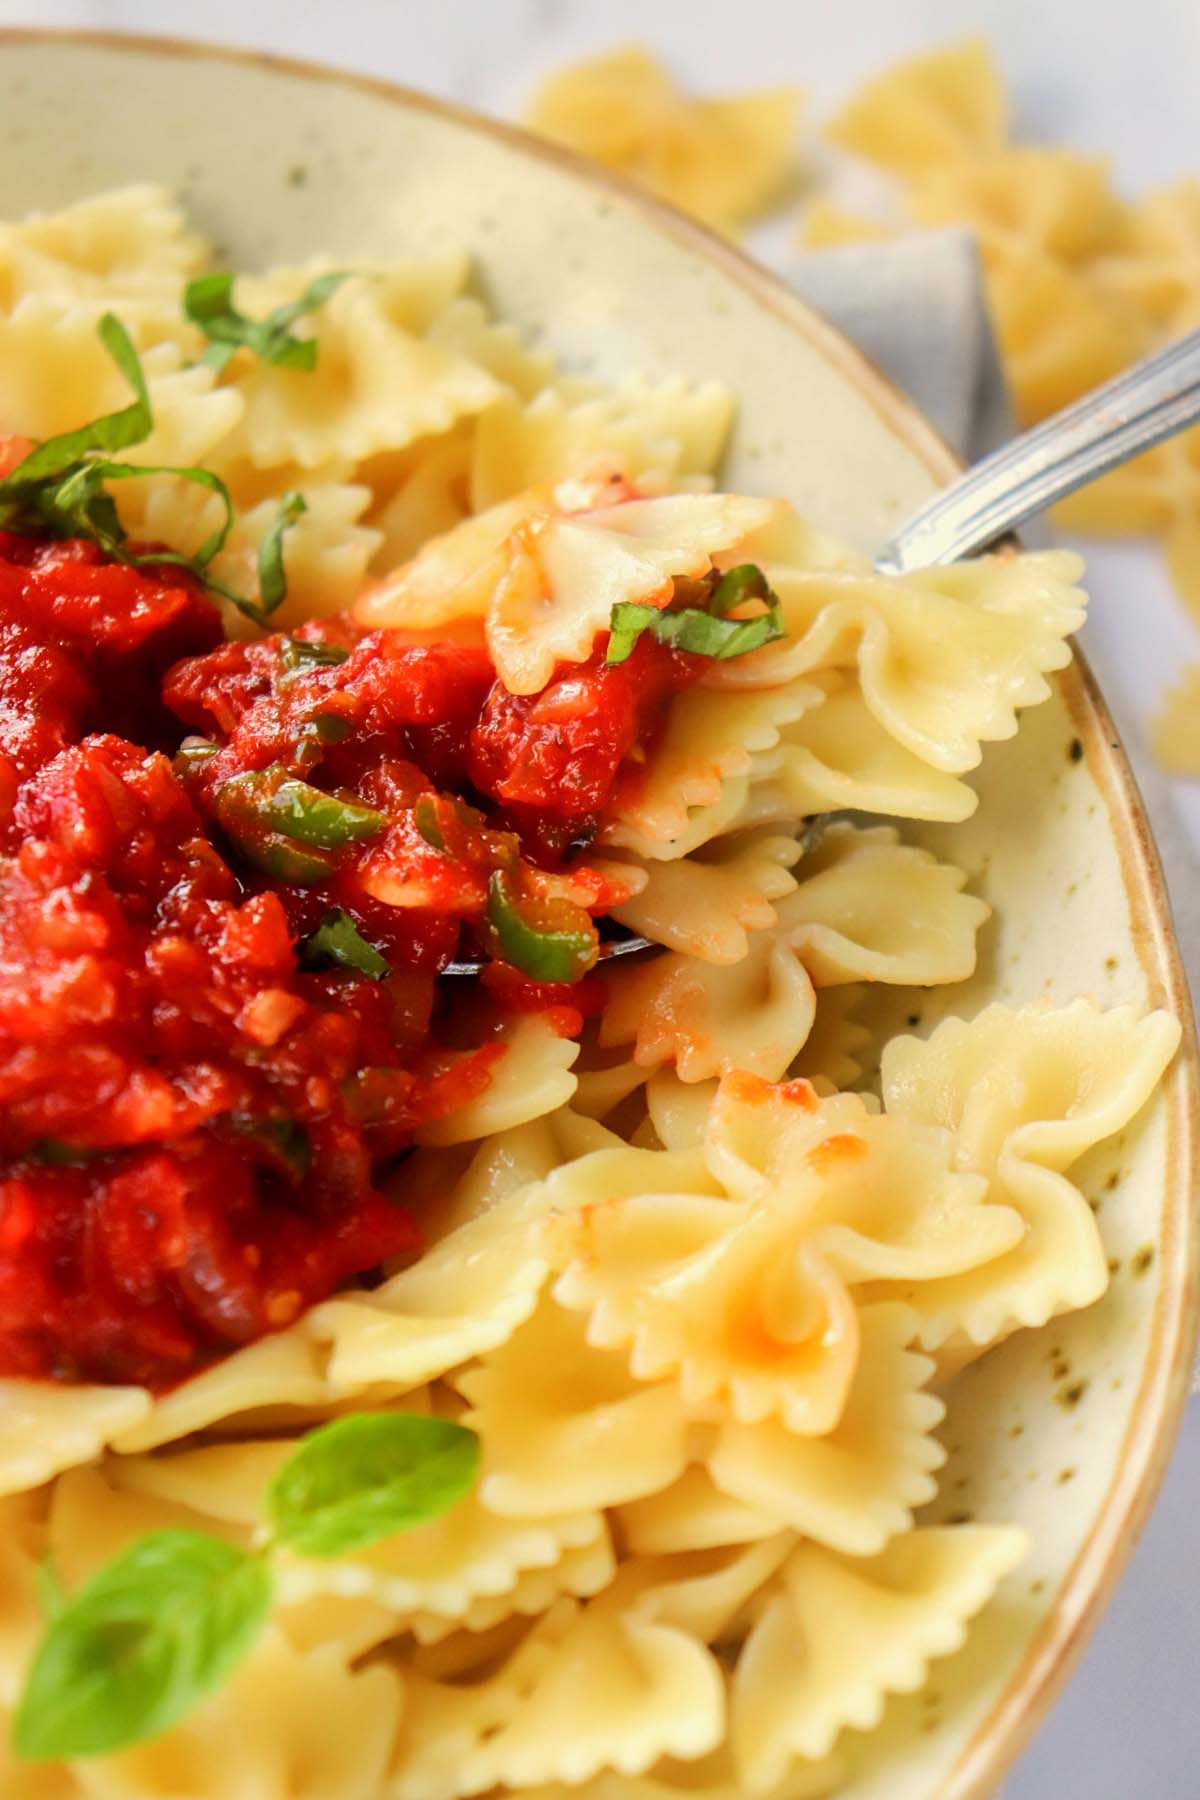 marinara sauce over pasta with a fork.